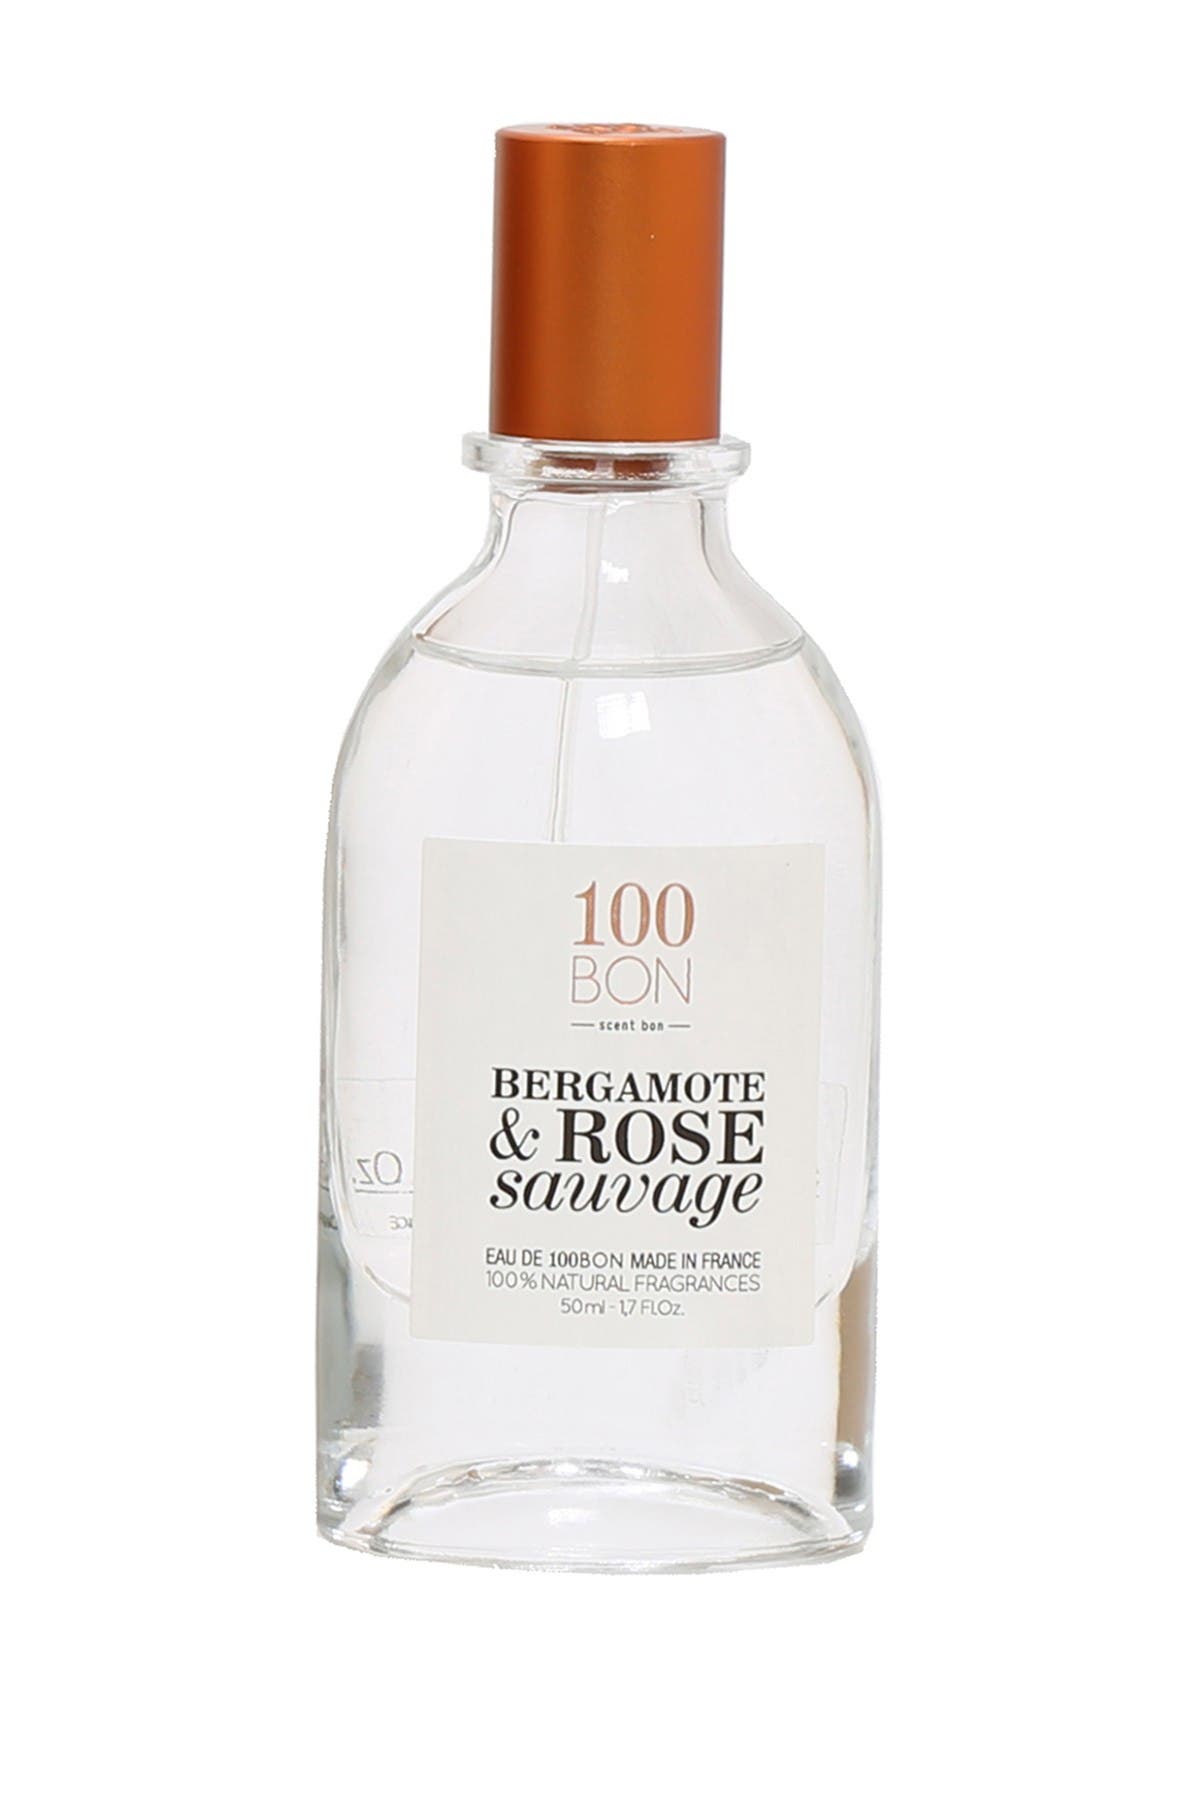 100 bon bergamot & rose sauvage